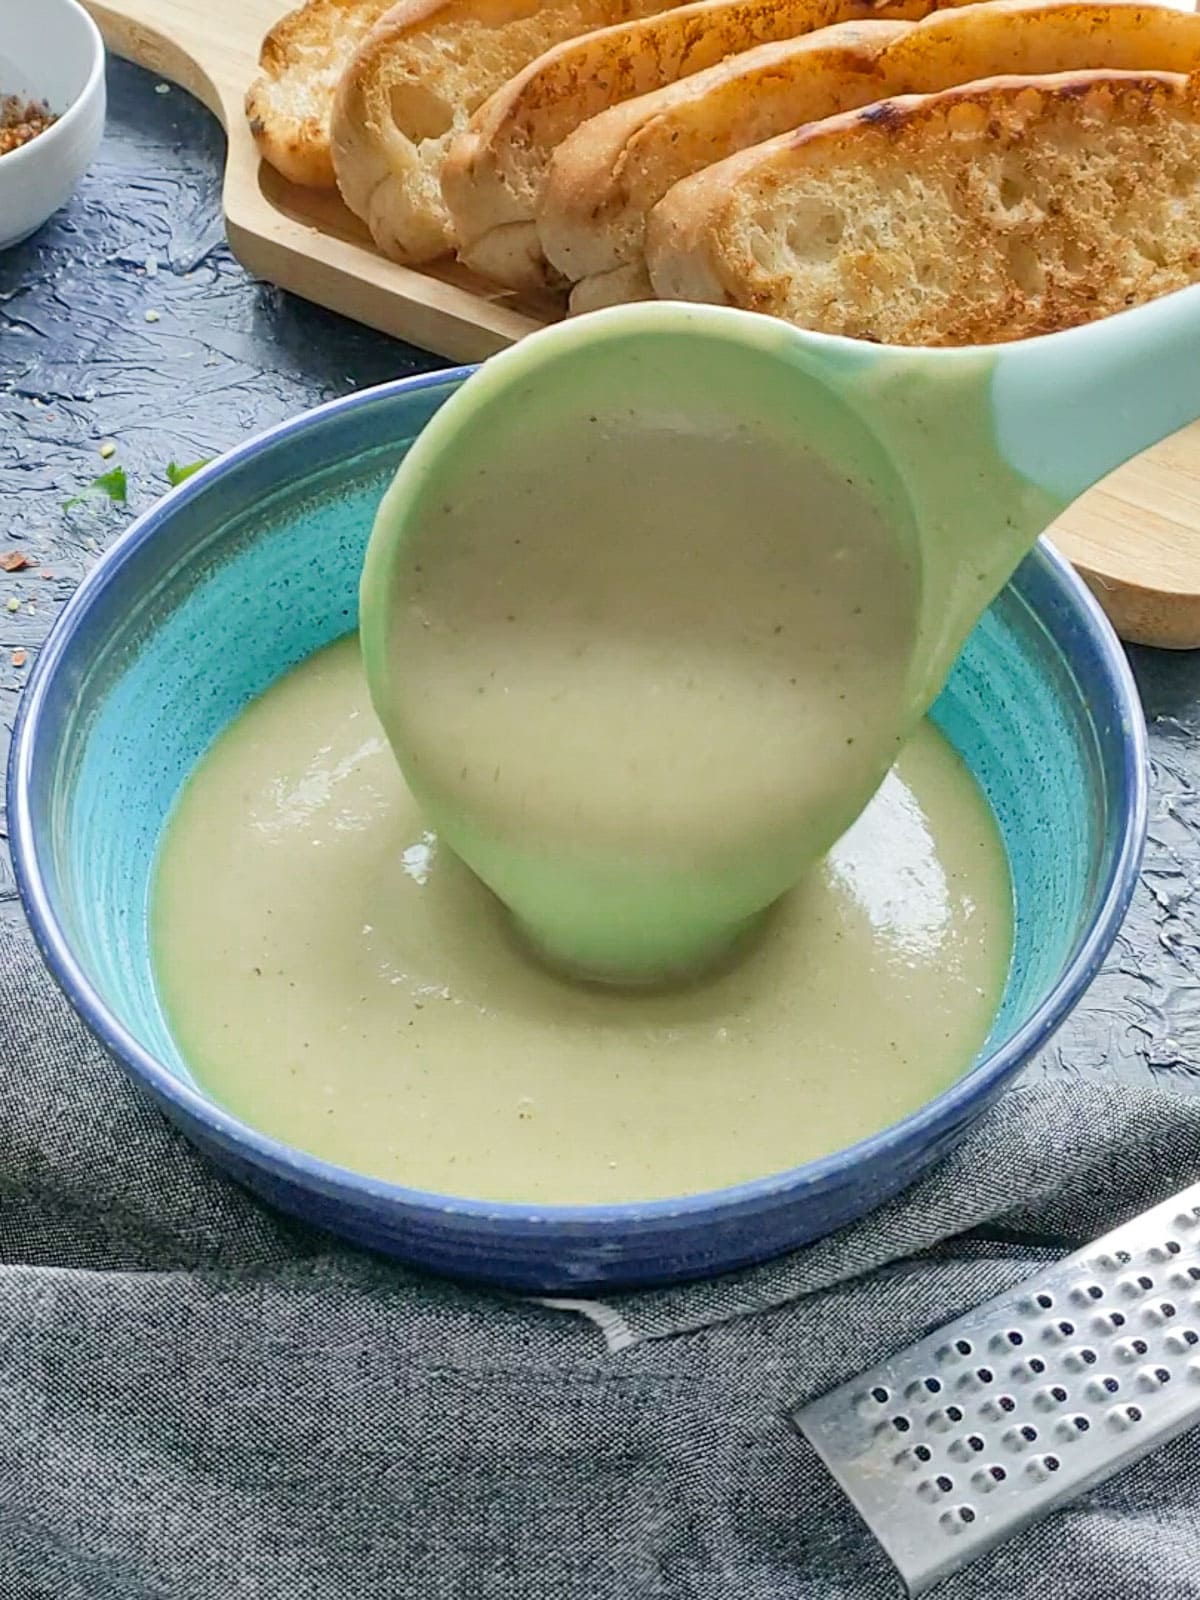 Cauliflower potato leek soup being poured into a blue bowl with a ladle.